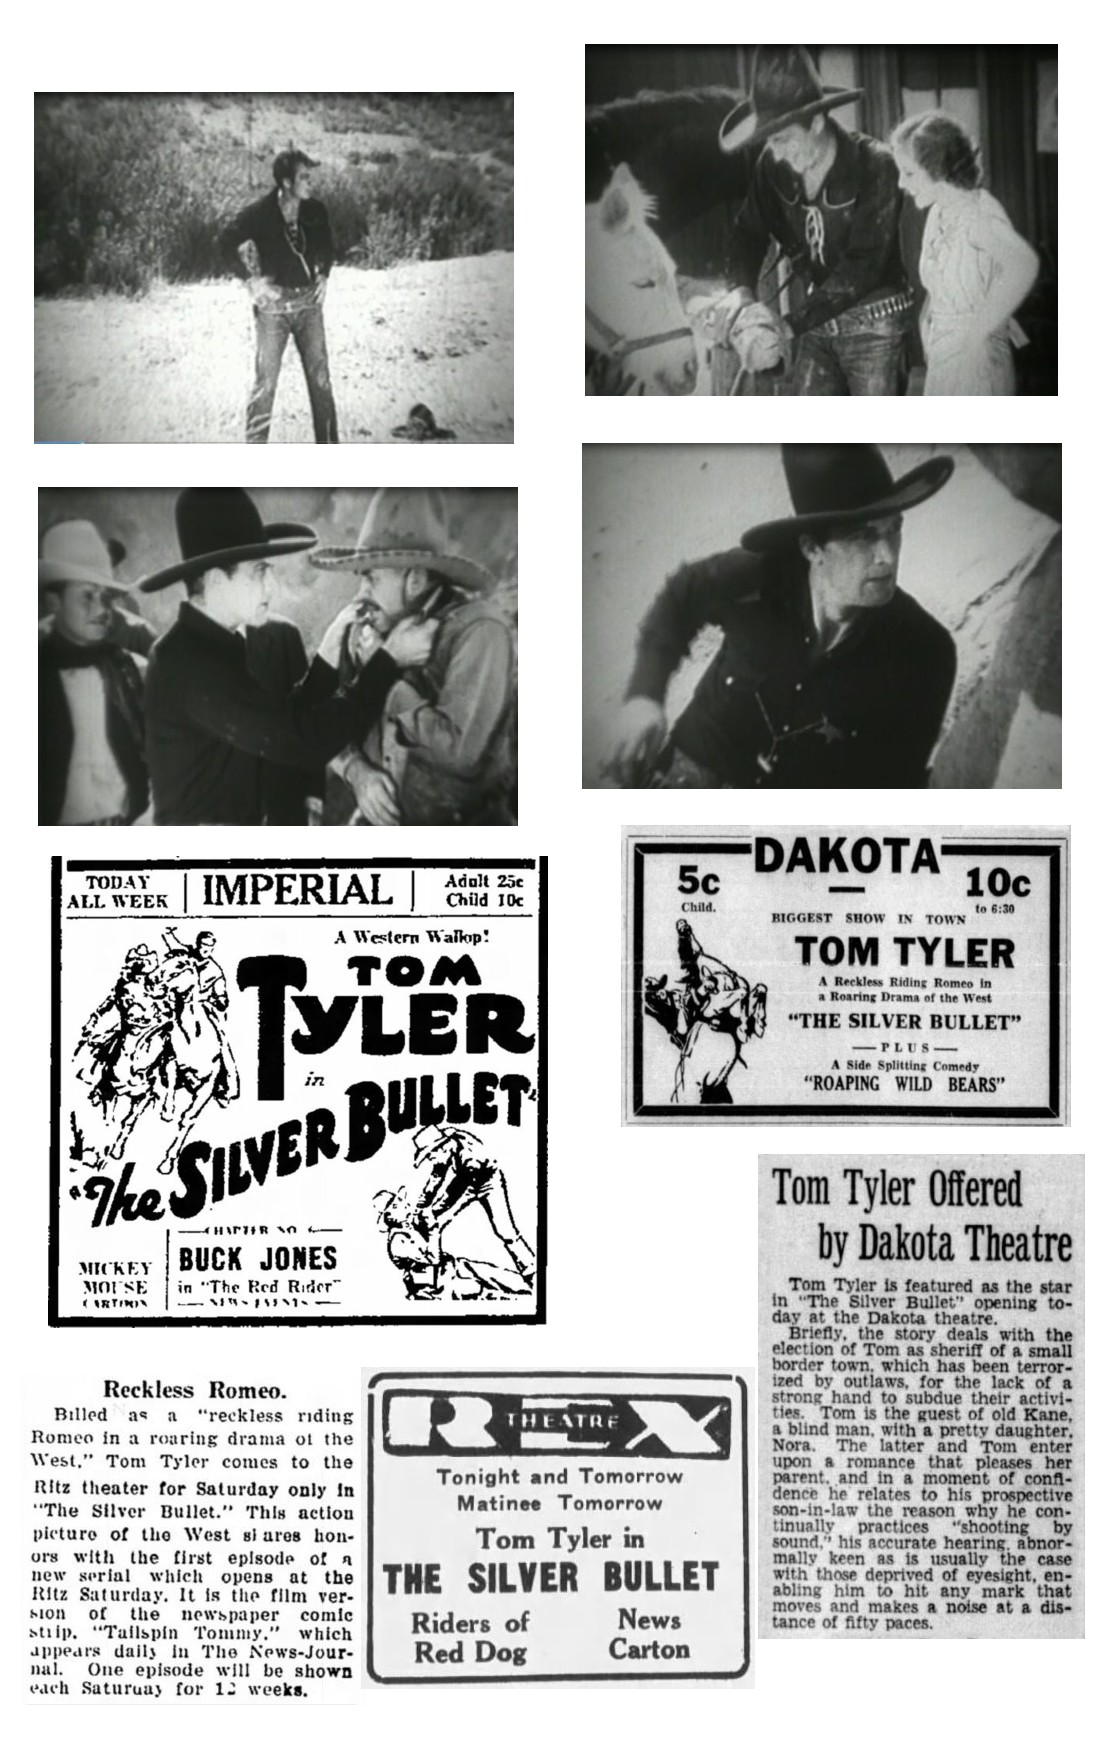 The Silver Bullet screencaps cinema ads film reviews